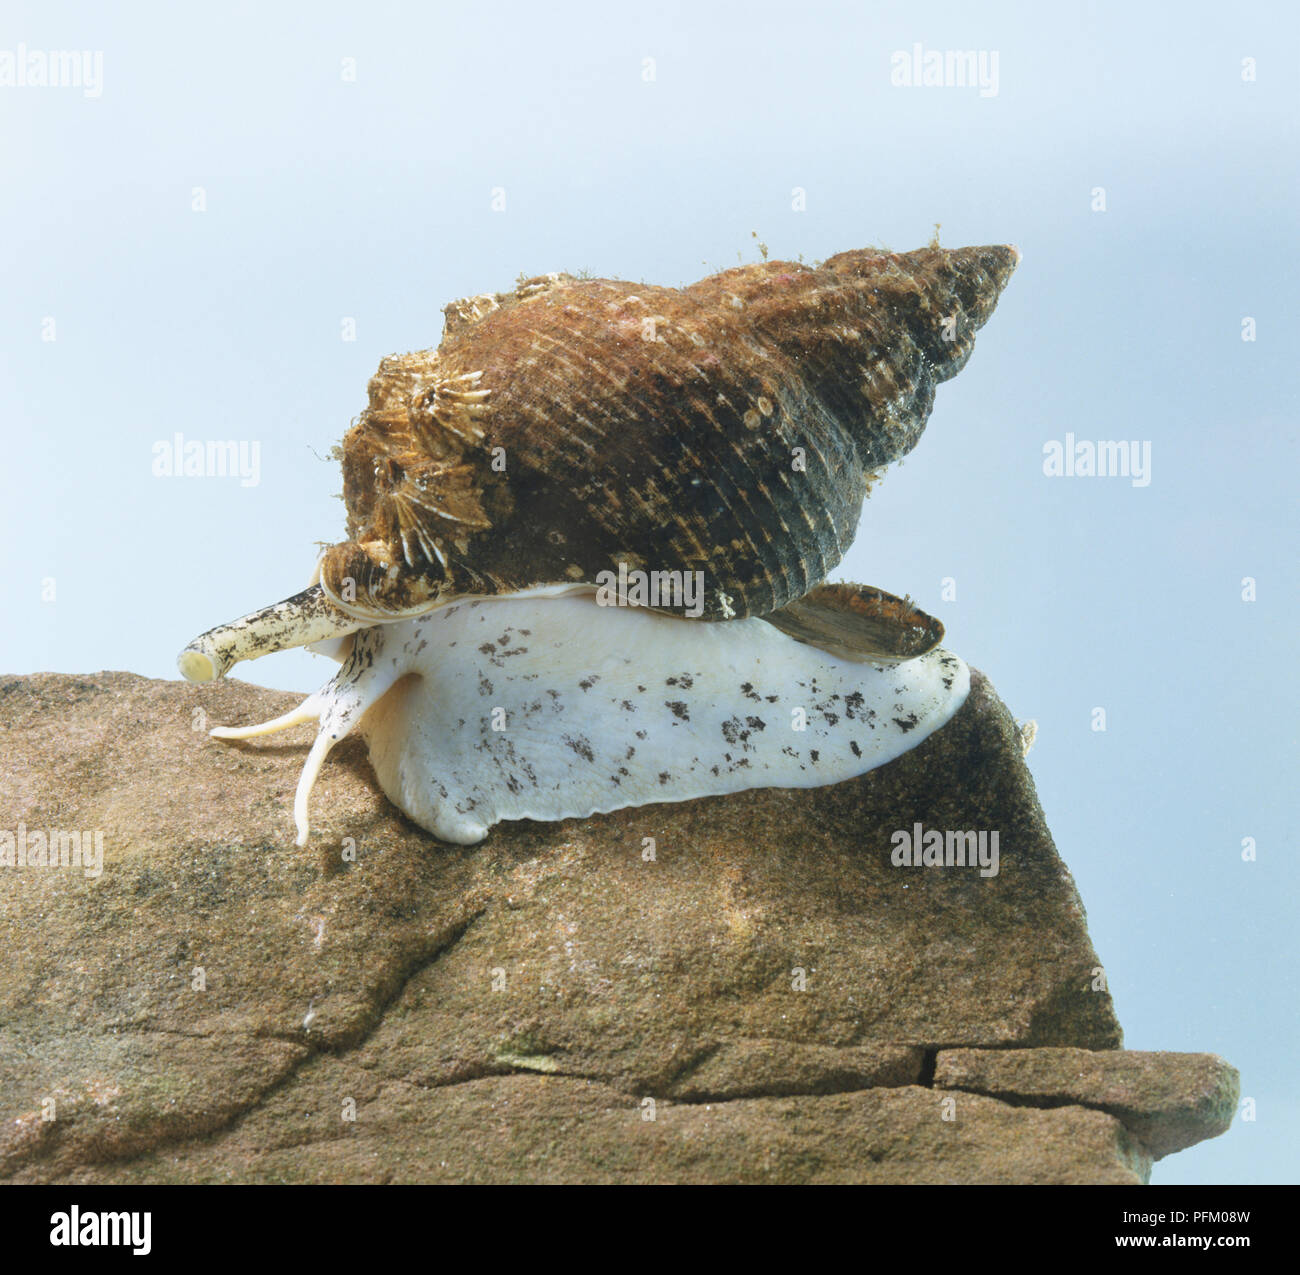 Common whelk (Buccinidae), a marine snail on a rock Stock Photo